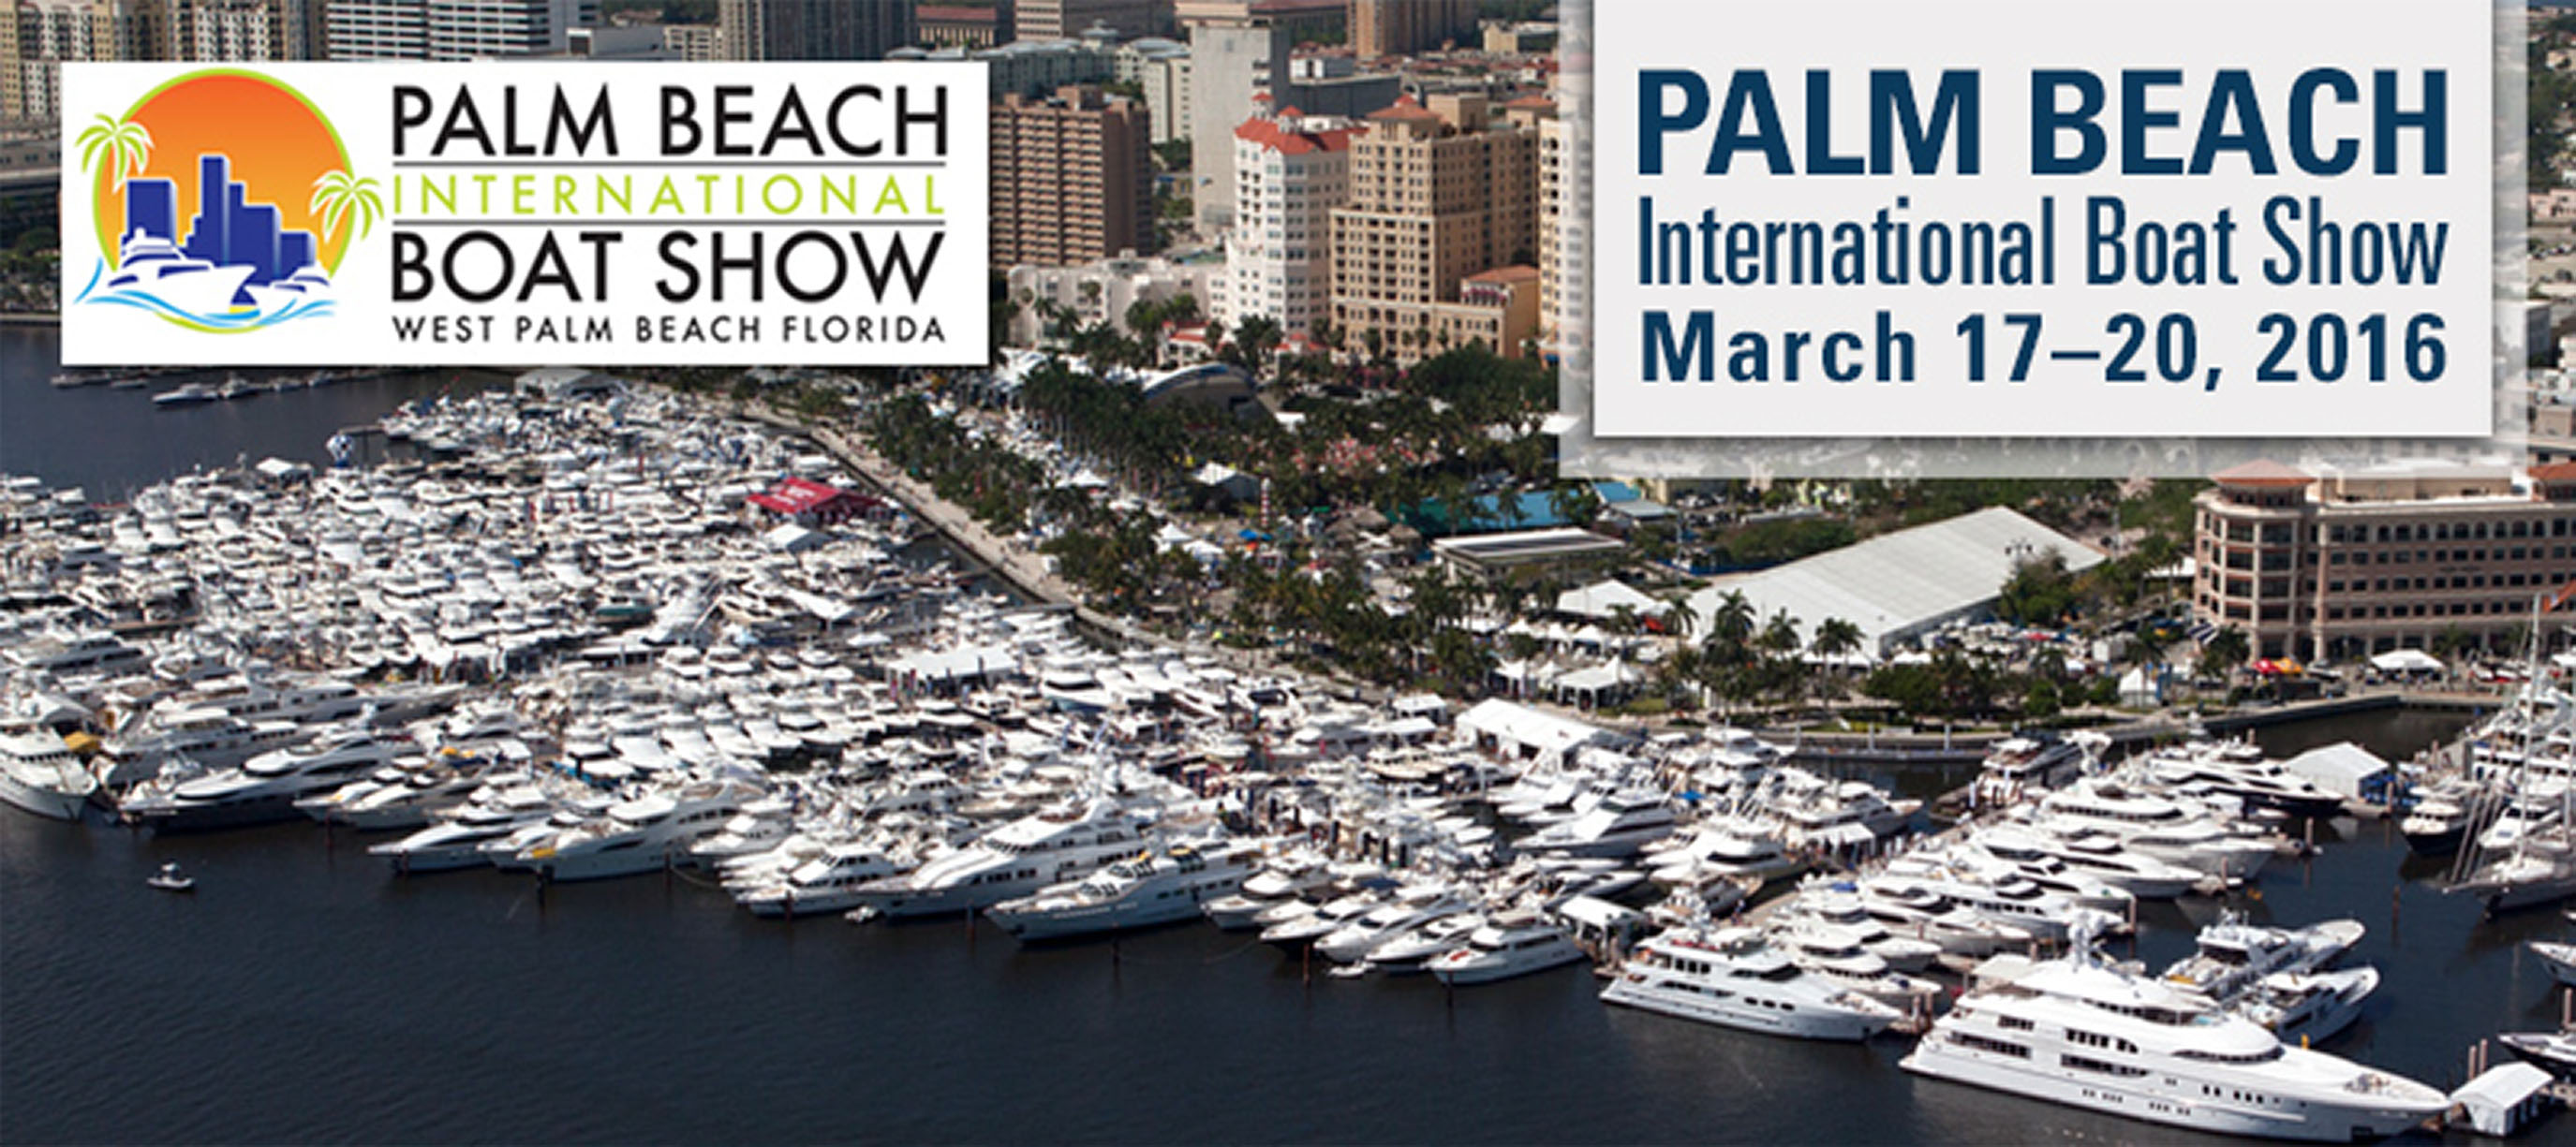 Preparations underway for Palm Beach International Boat Show